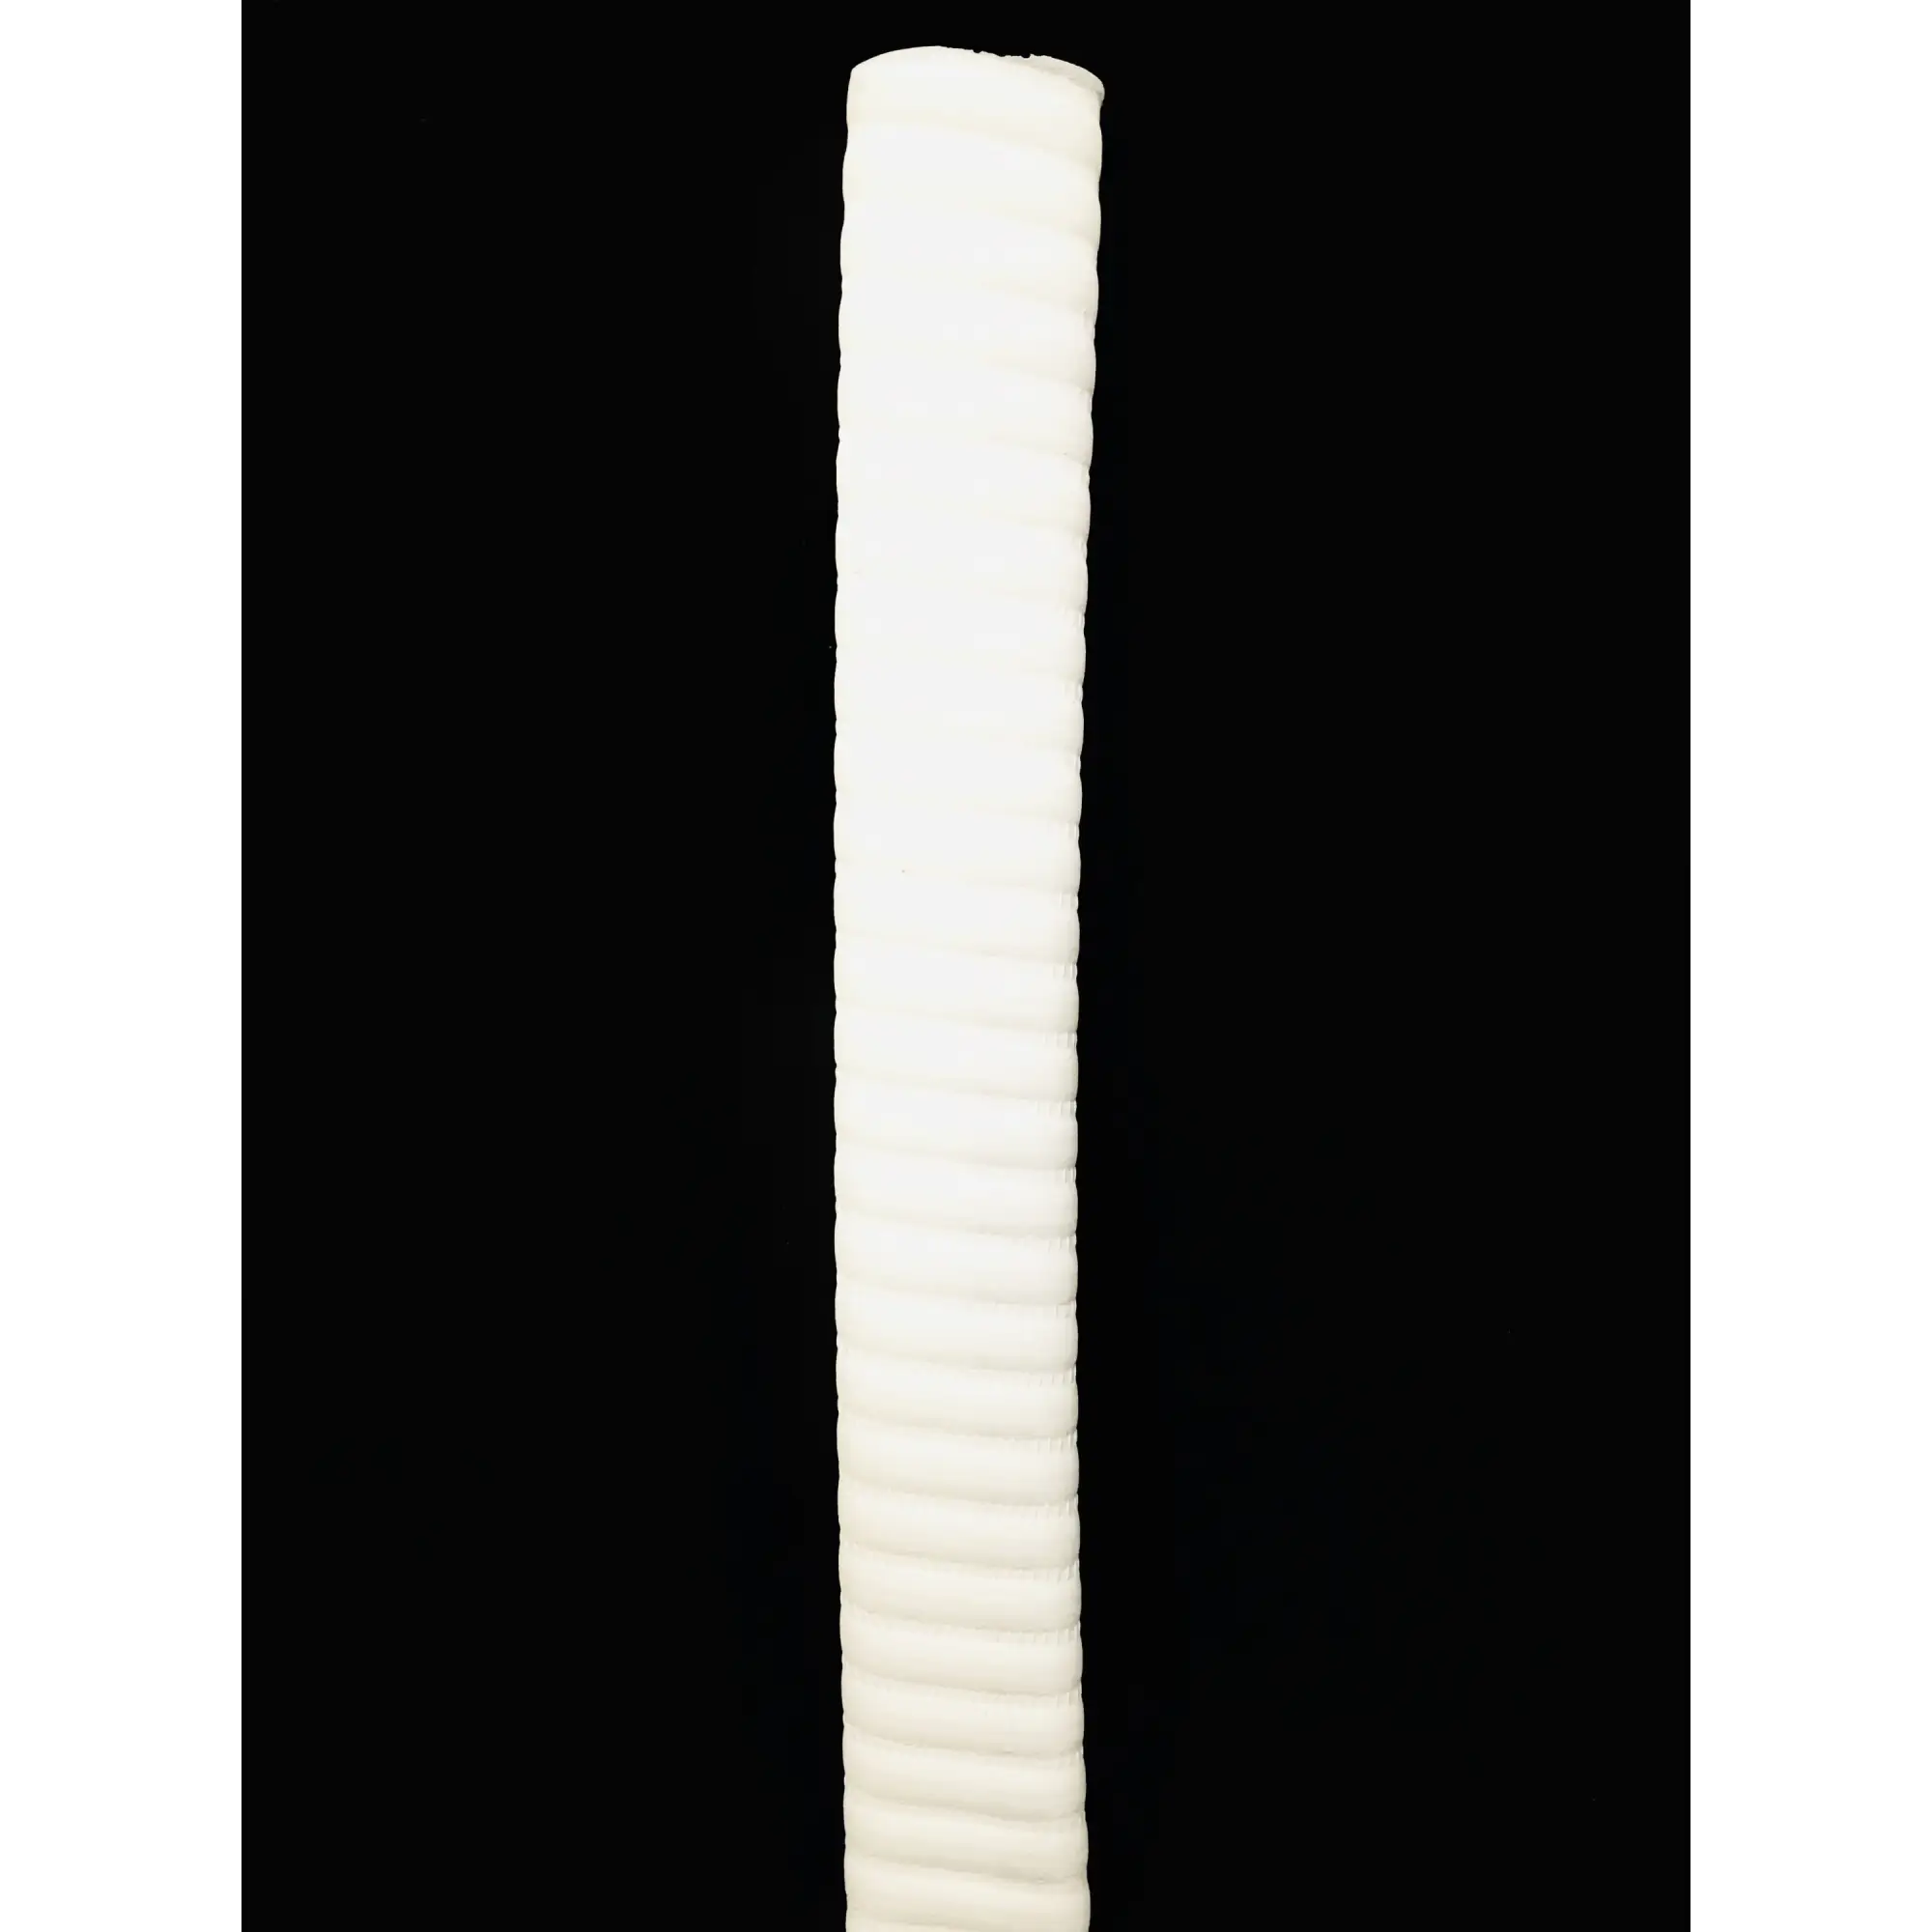 Cricket Bat Handle Grip Coil Design by Graddige - Cricket Bat Grip